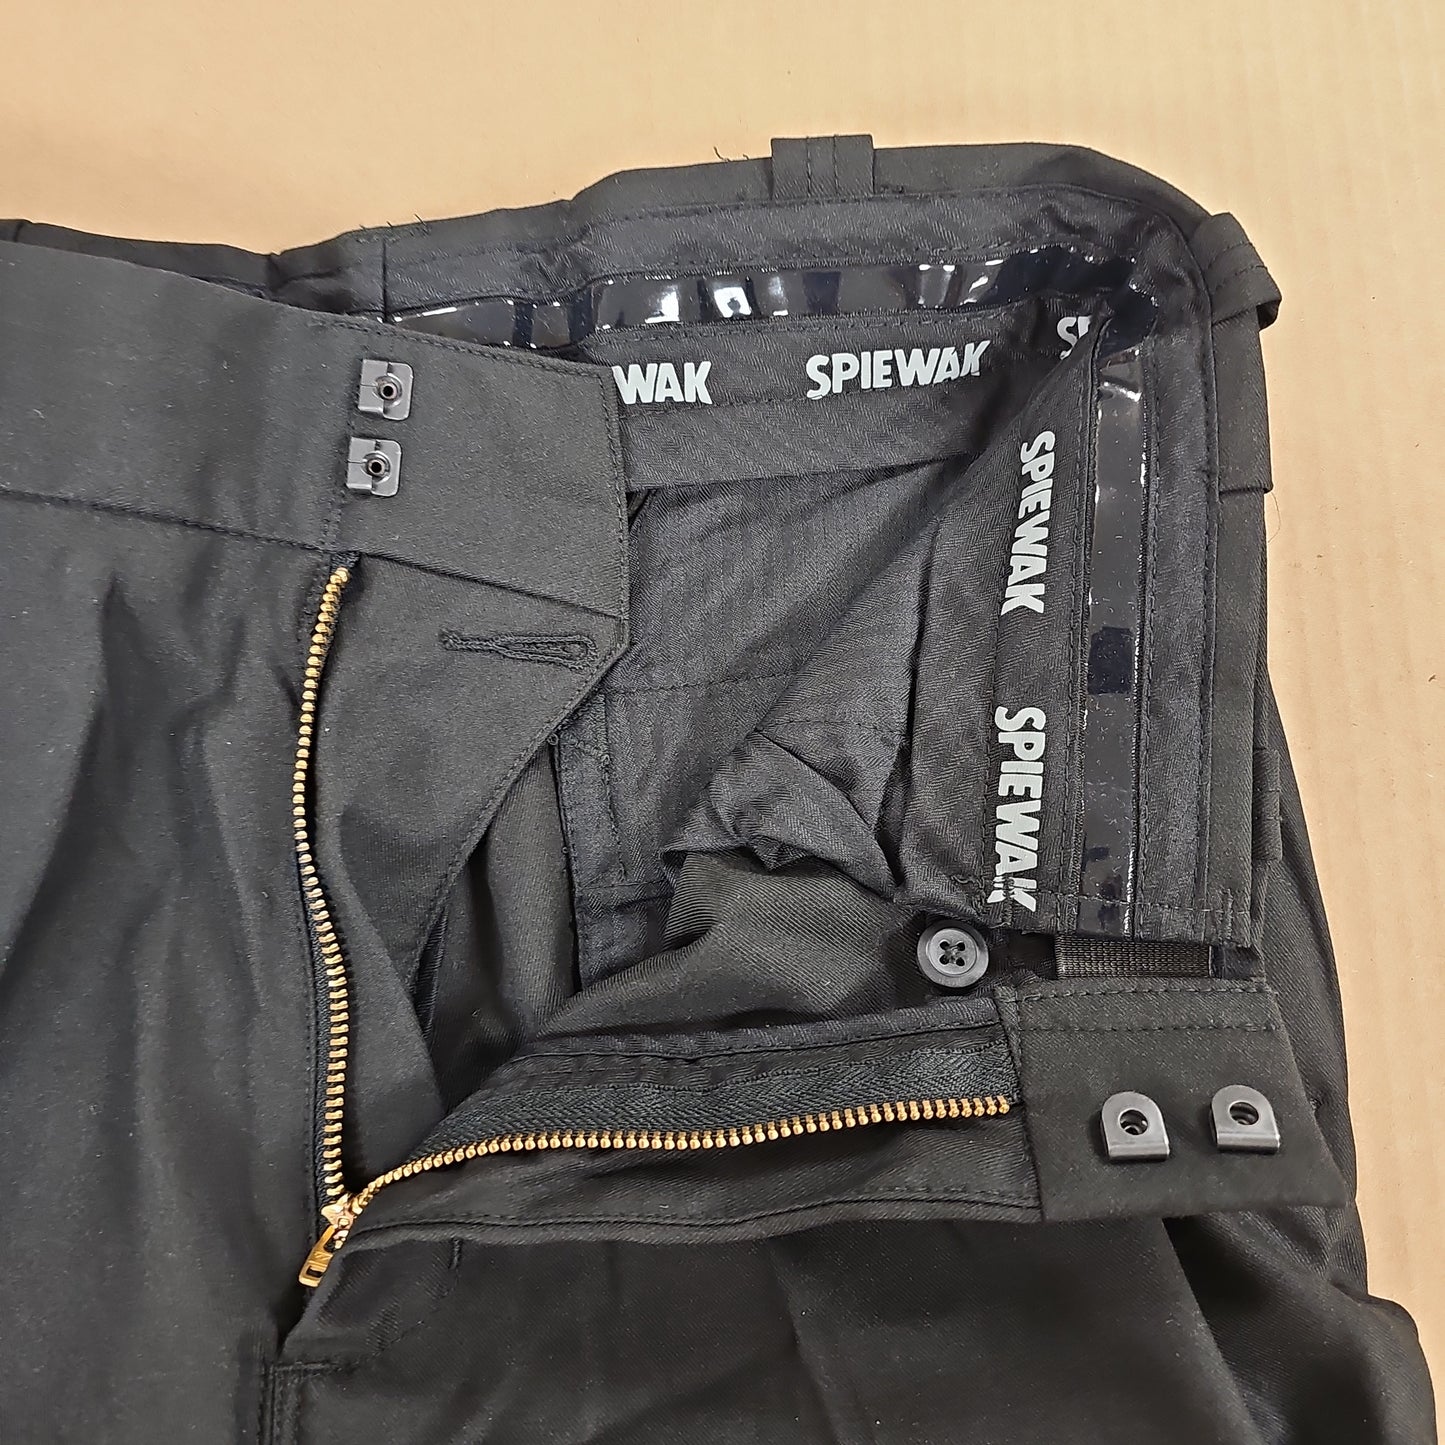 Pants: SPDU21, External Cargo, Black, 30 SPDU21-083-30